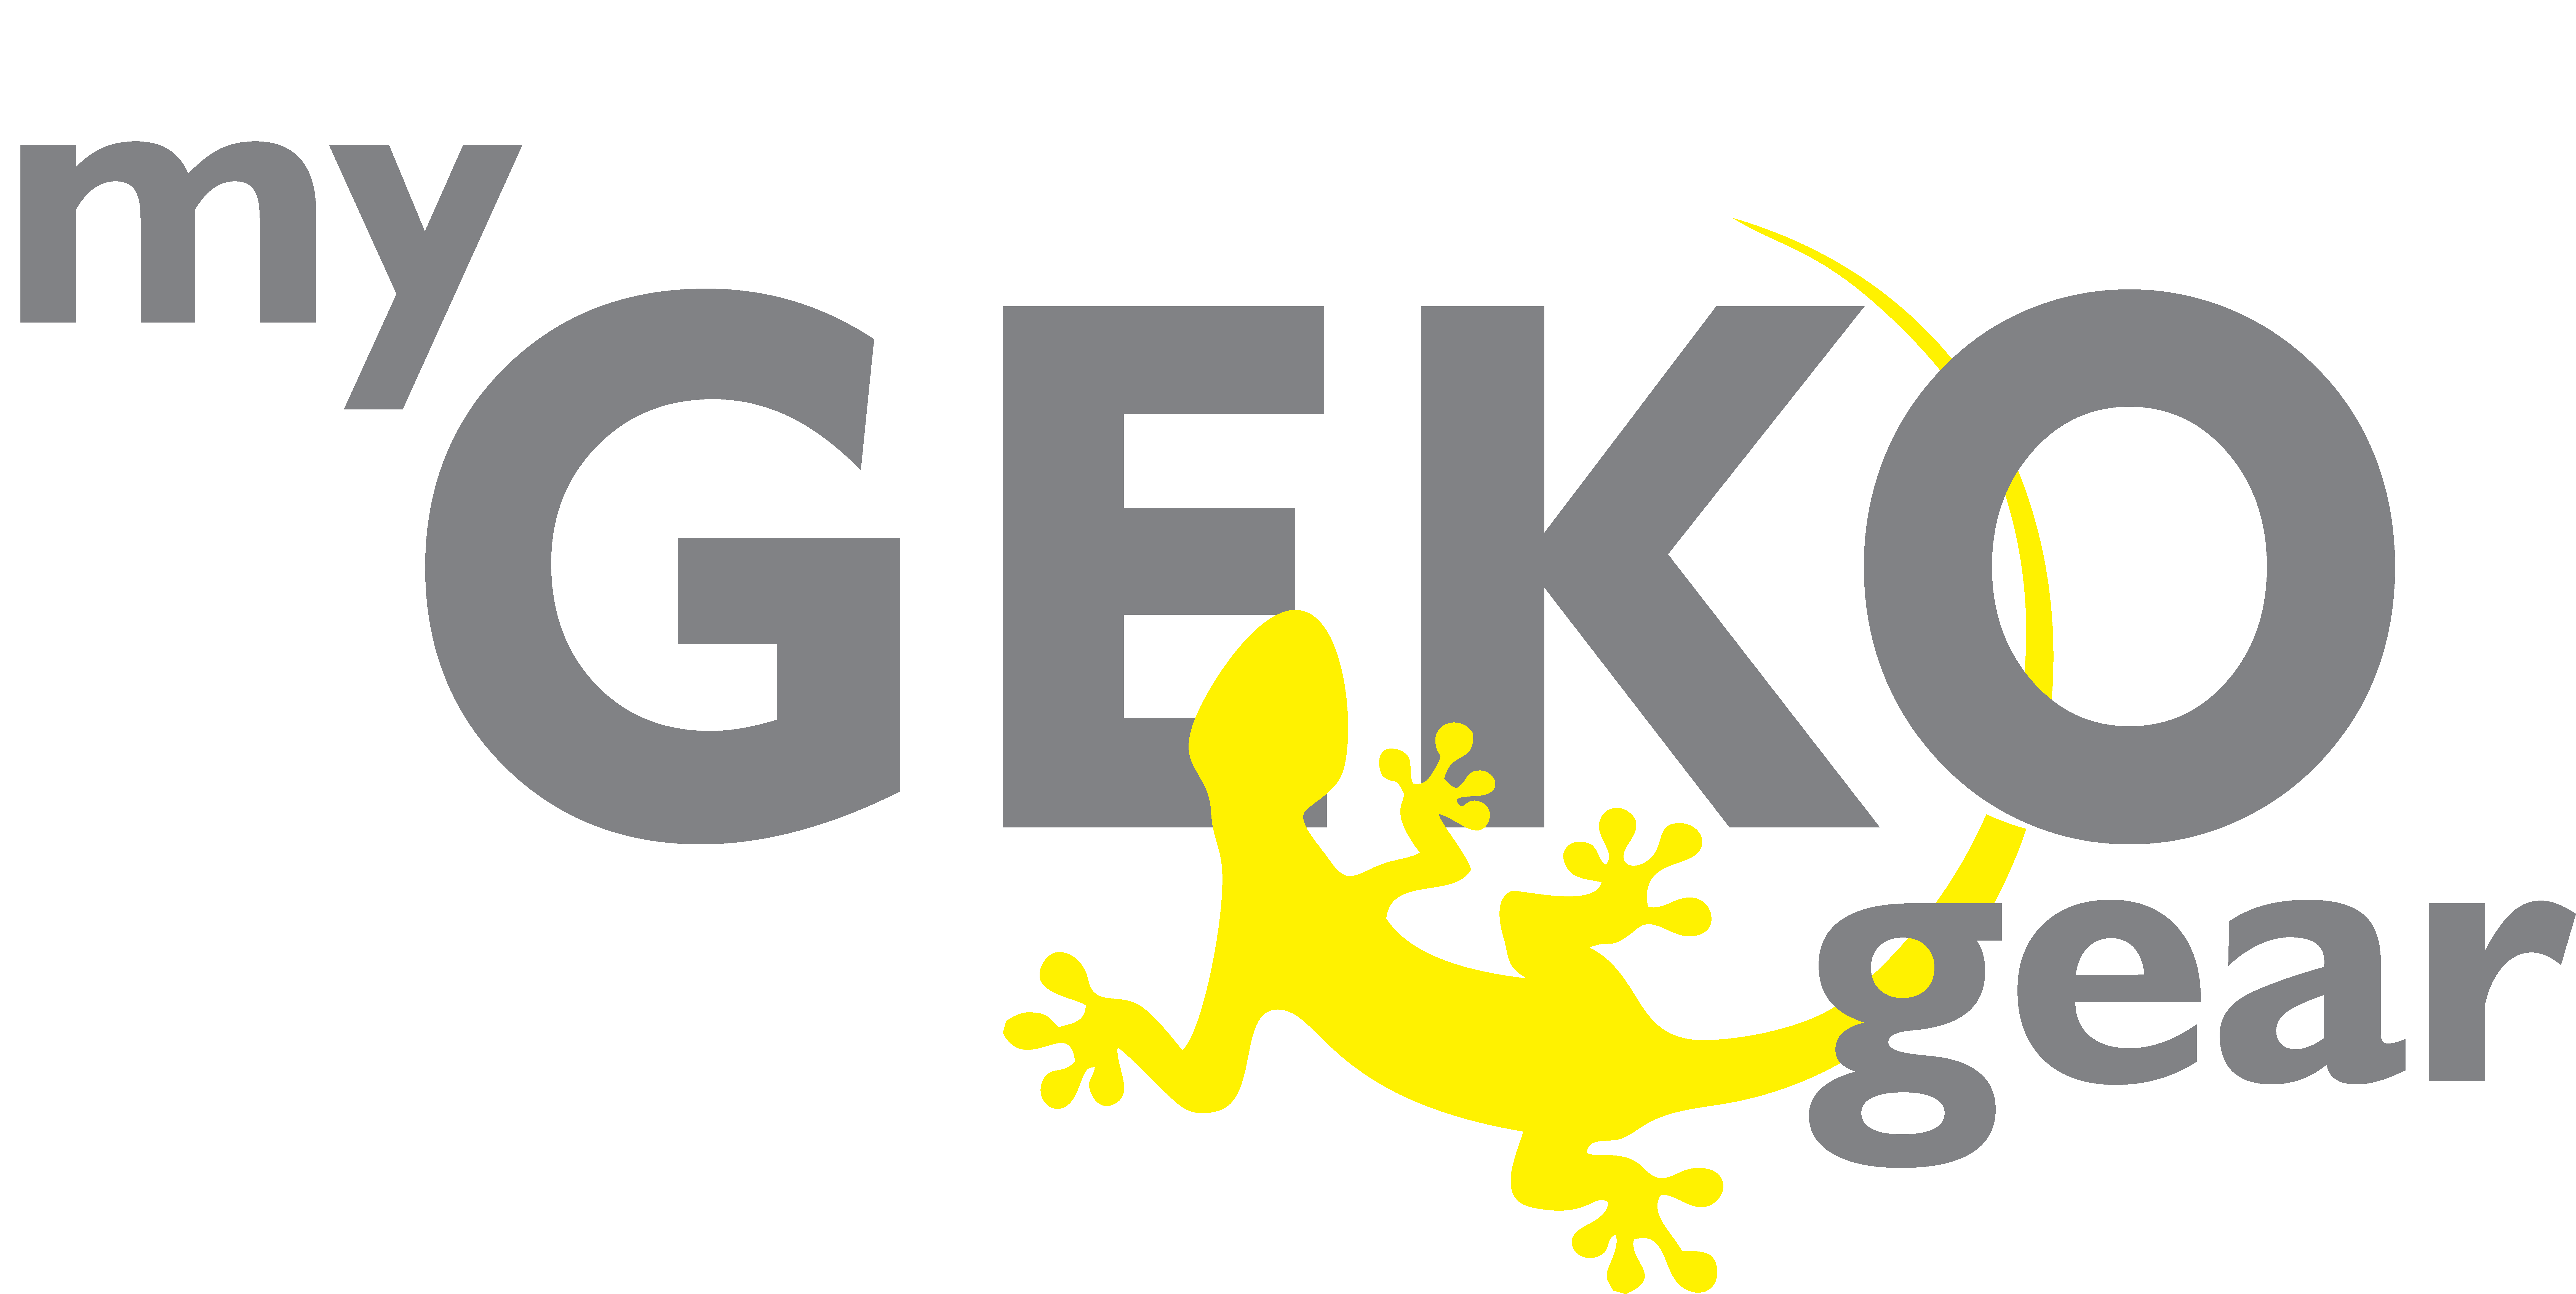 MyGeckoGear